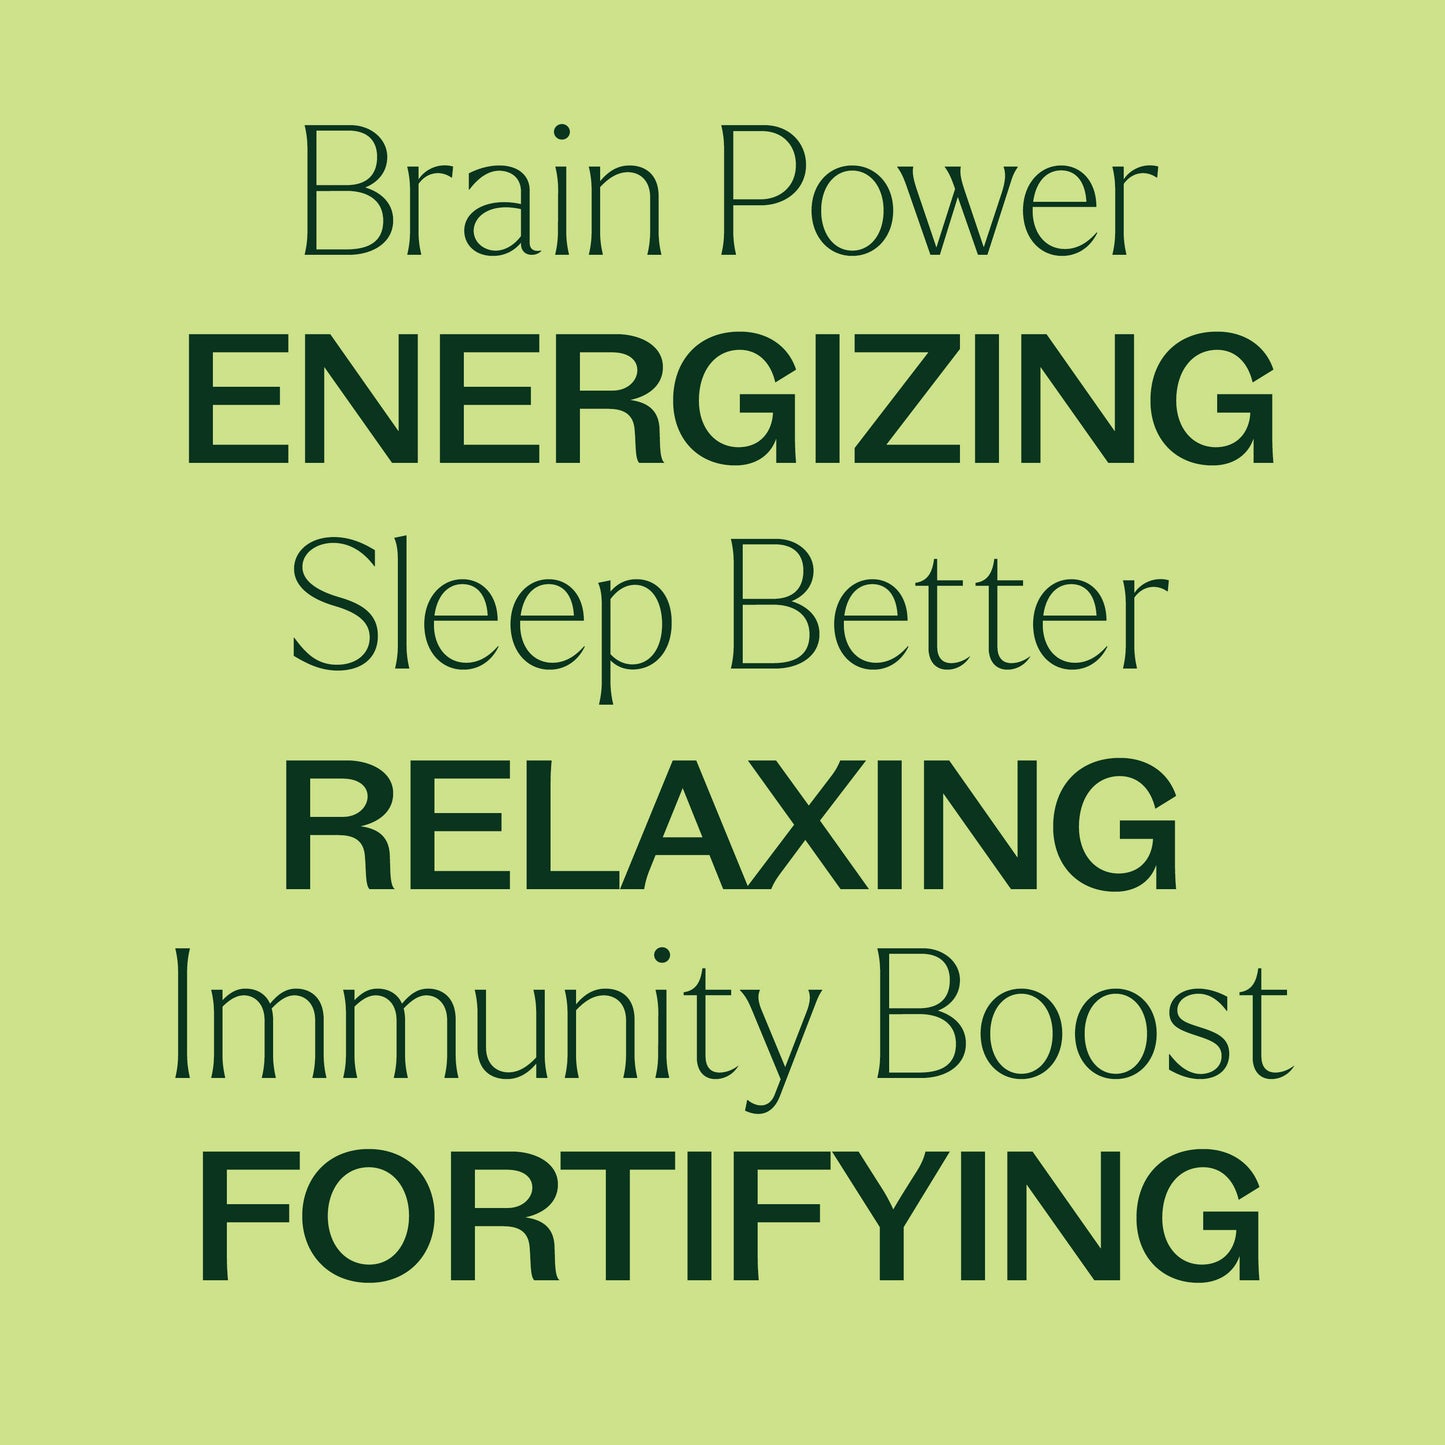 Brain Power, Sleep Better, Immunity Boost, energizing, relaxing, fortifying